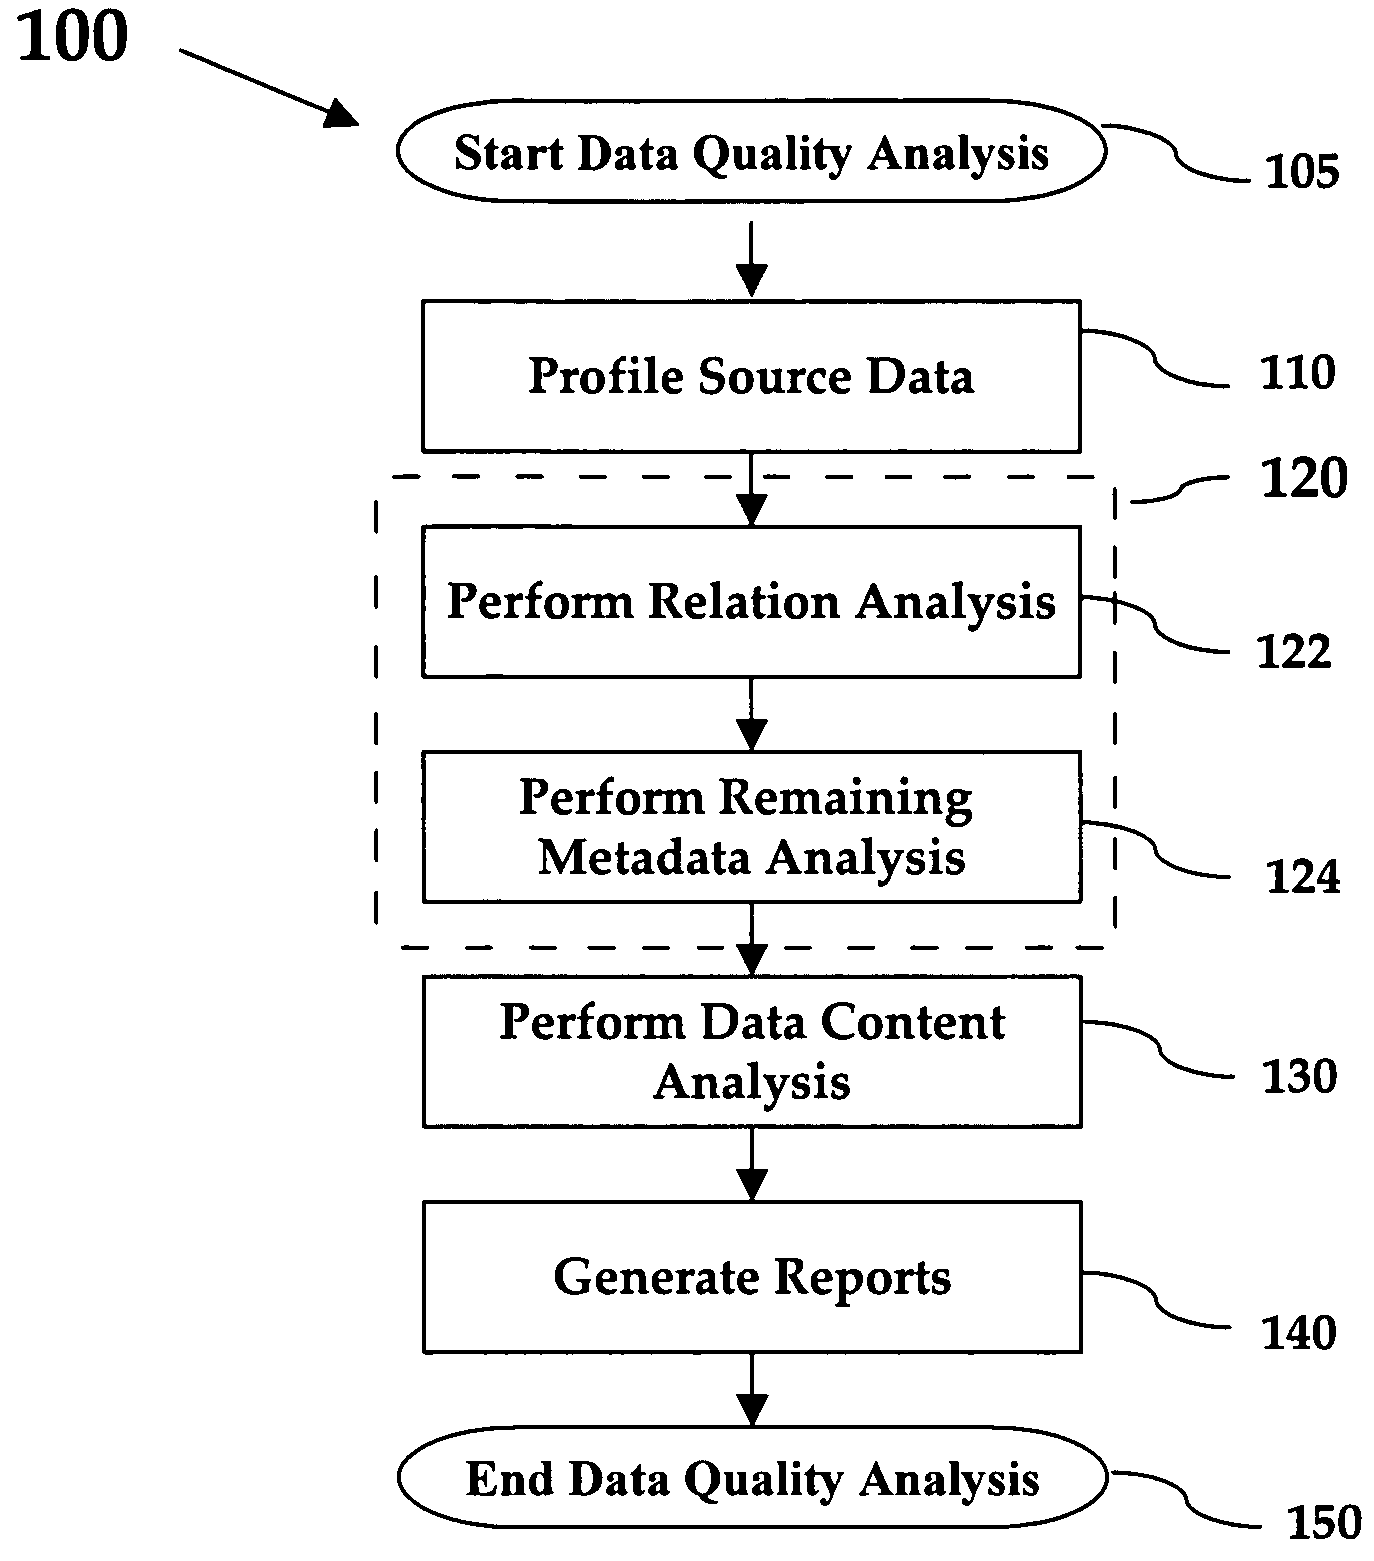 Method of conducting data quality analysis